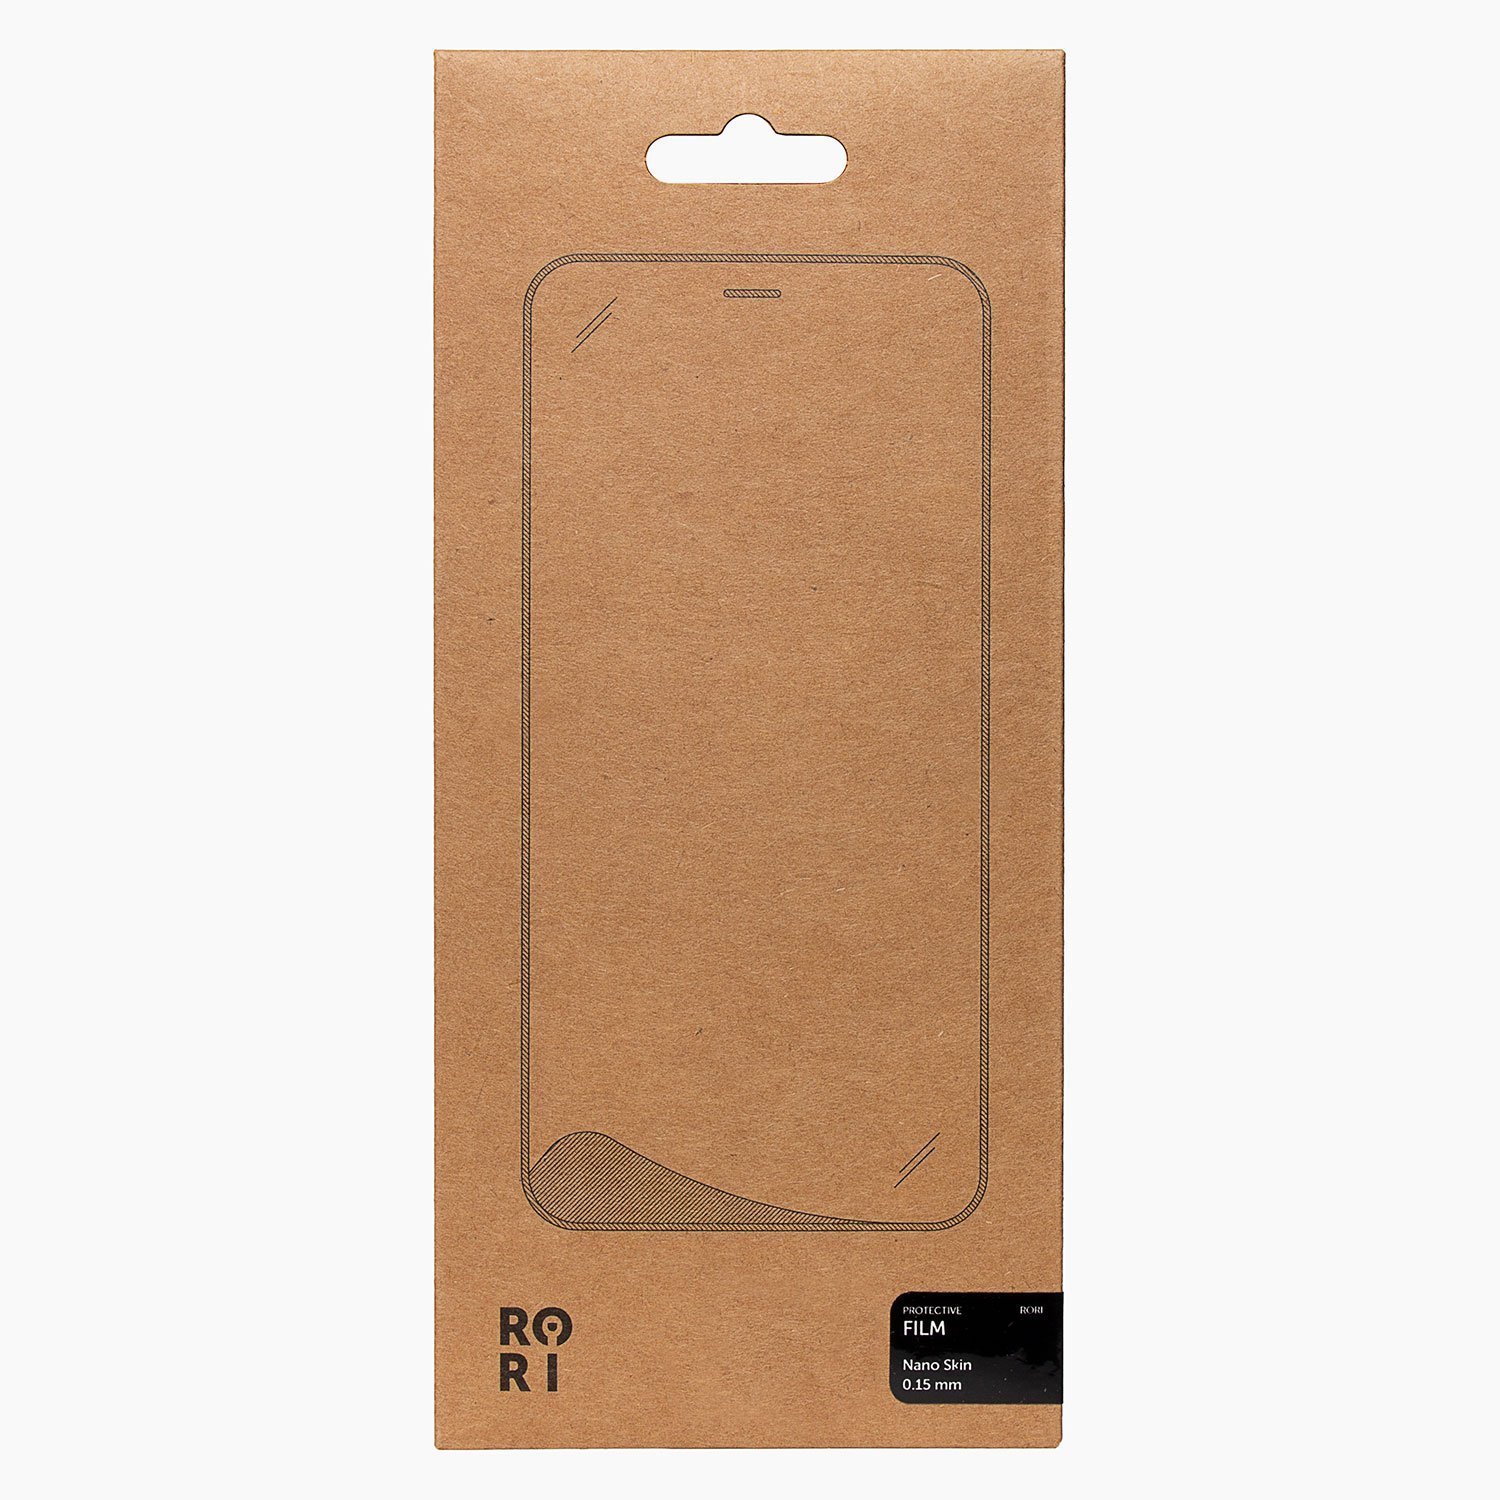 Защитная пленка Rori Polymer для экрана смартфона Samsung SM-A105 Galaxy A10, FullScreen, черная рамка (119522)